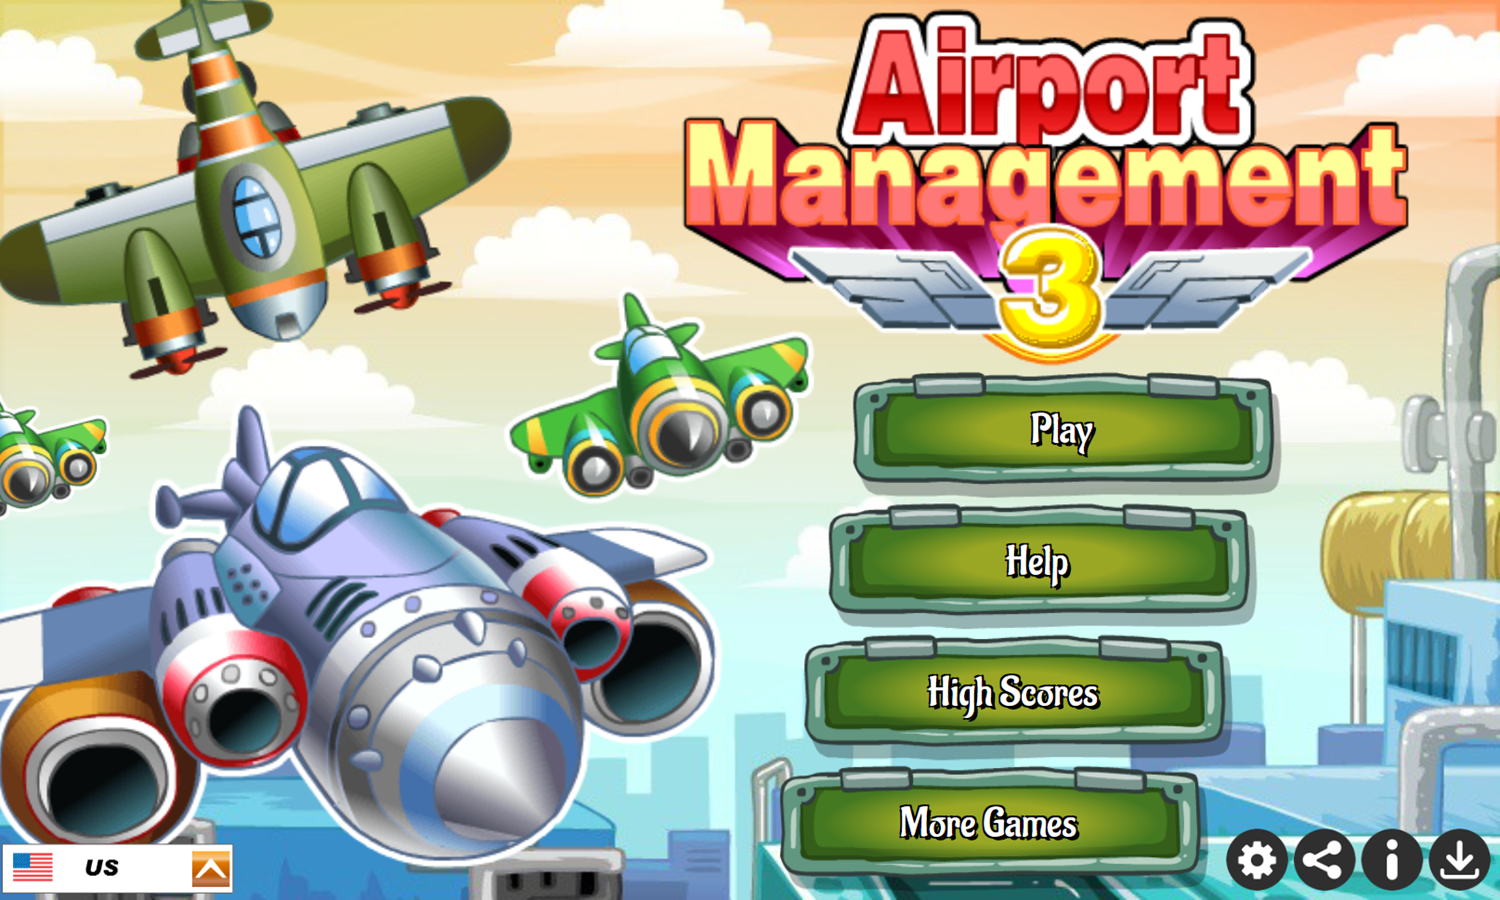 Airport Management 3 Game Welcome Screen Screenshot.